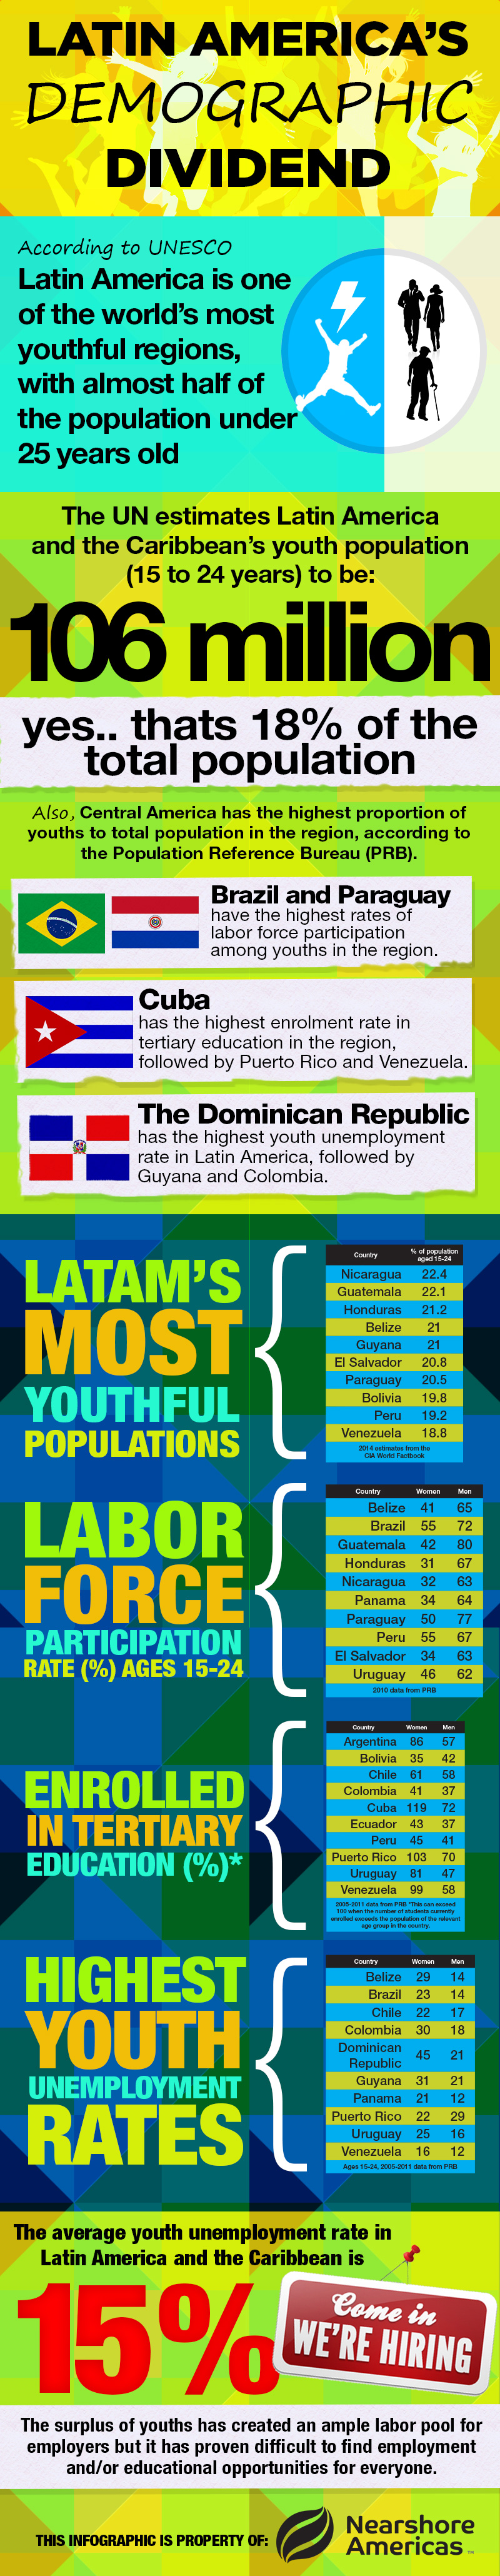 infographic la demographic dividend Infographic: Latin America’s Demographic Dividend